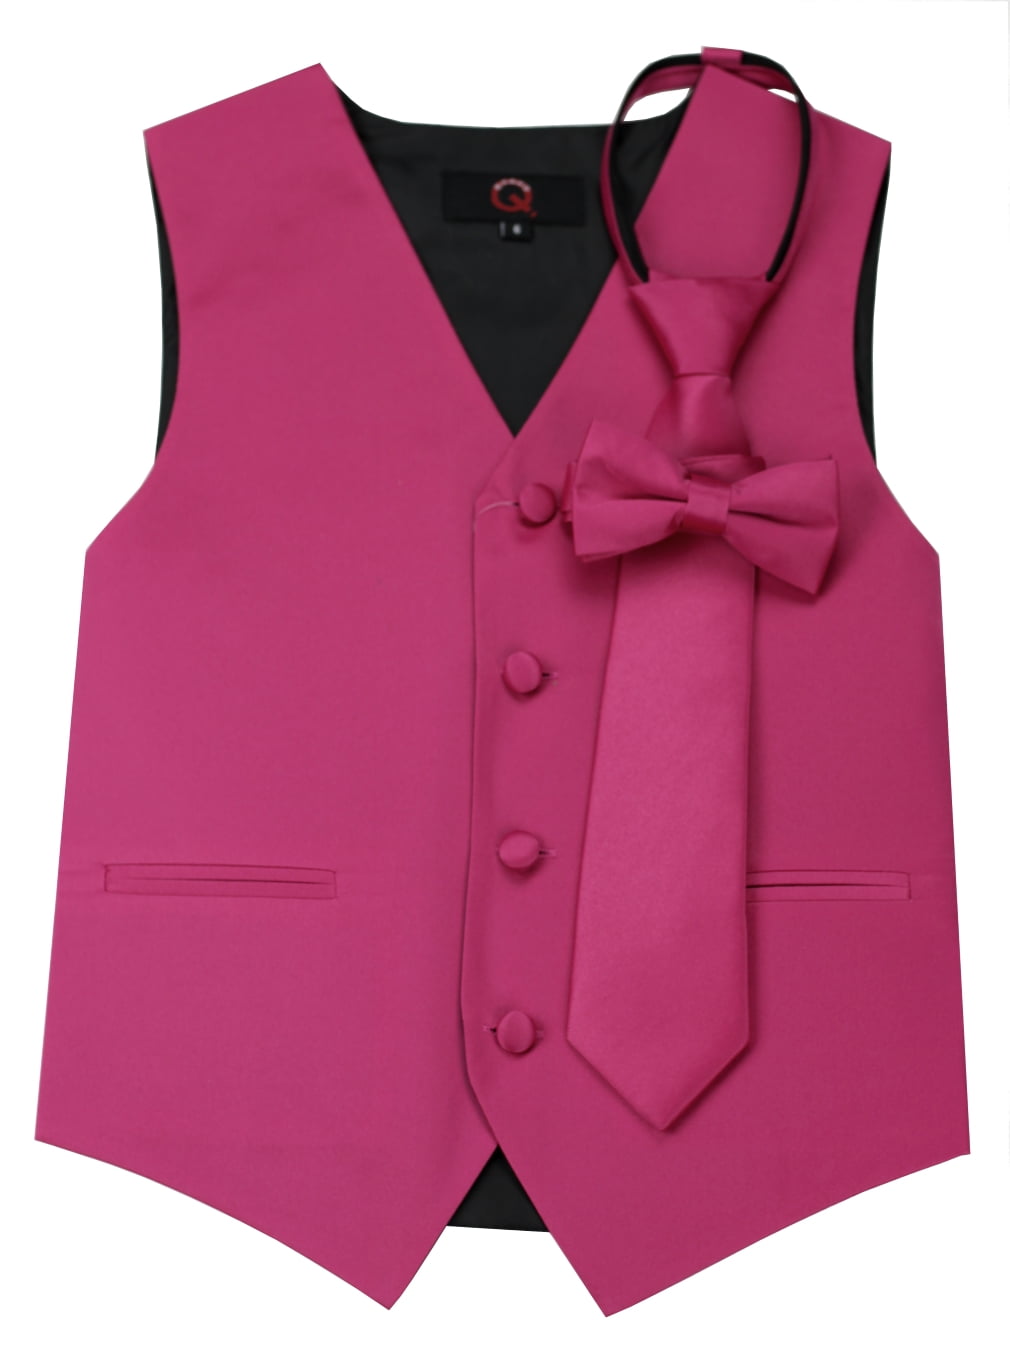 Boy's Fuchsia Satin Formal Dress Tuxedo Vest Wedding Tie & Bow-Tie Set 